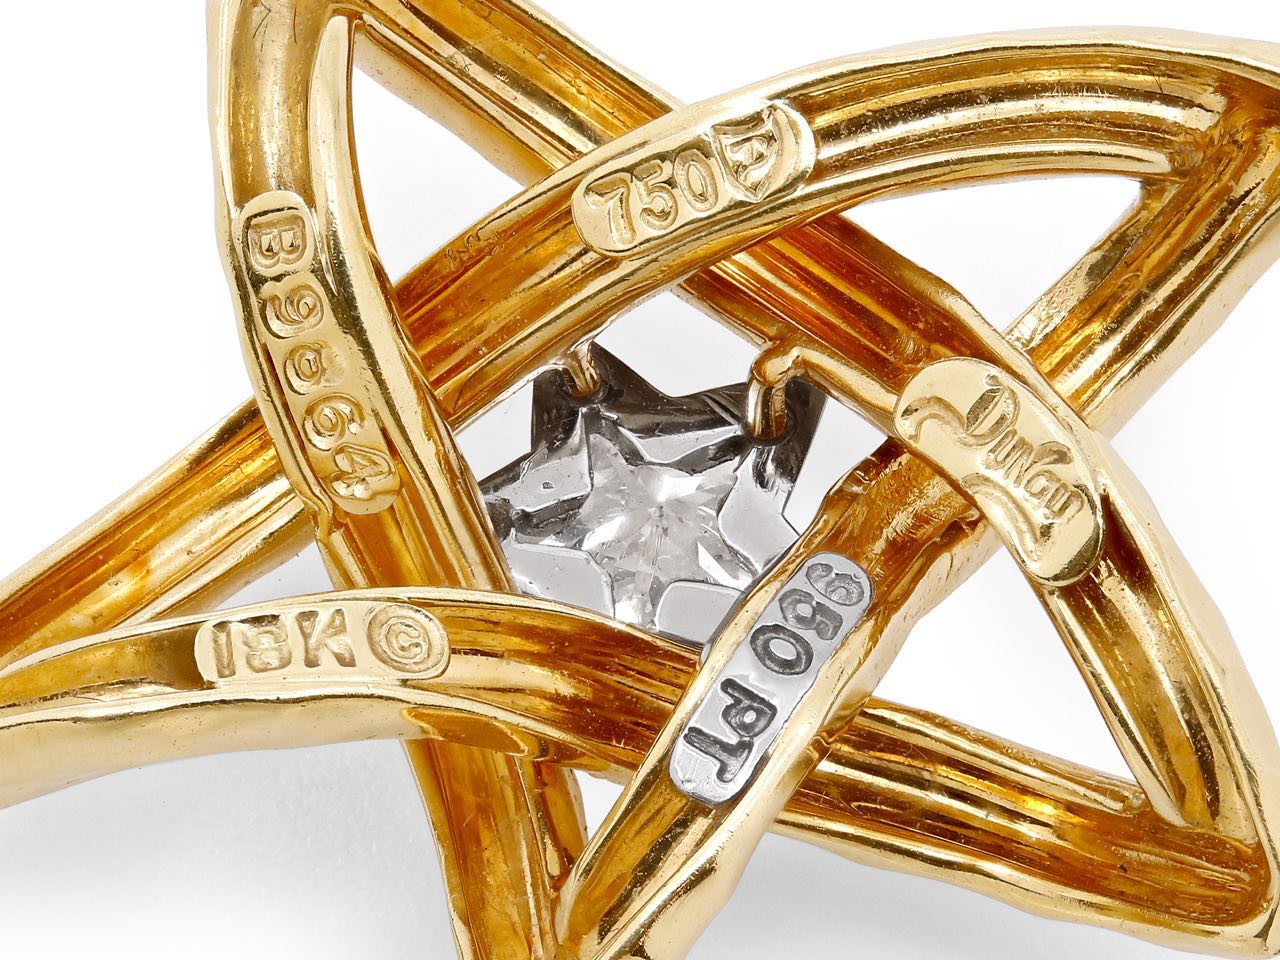 Henry Dunay Diamond Star Pendant in 18K Yellow Gold